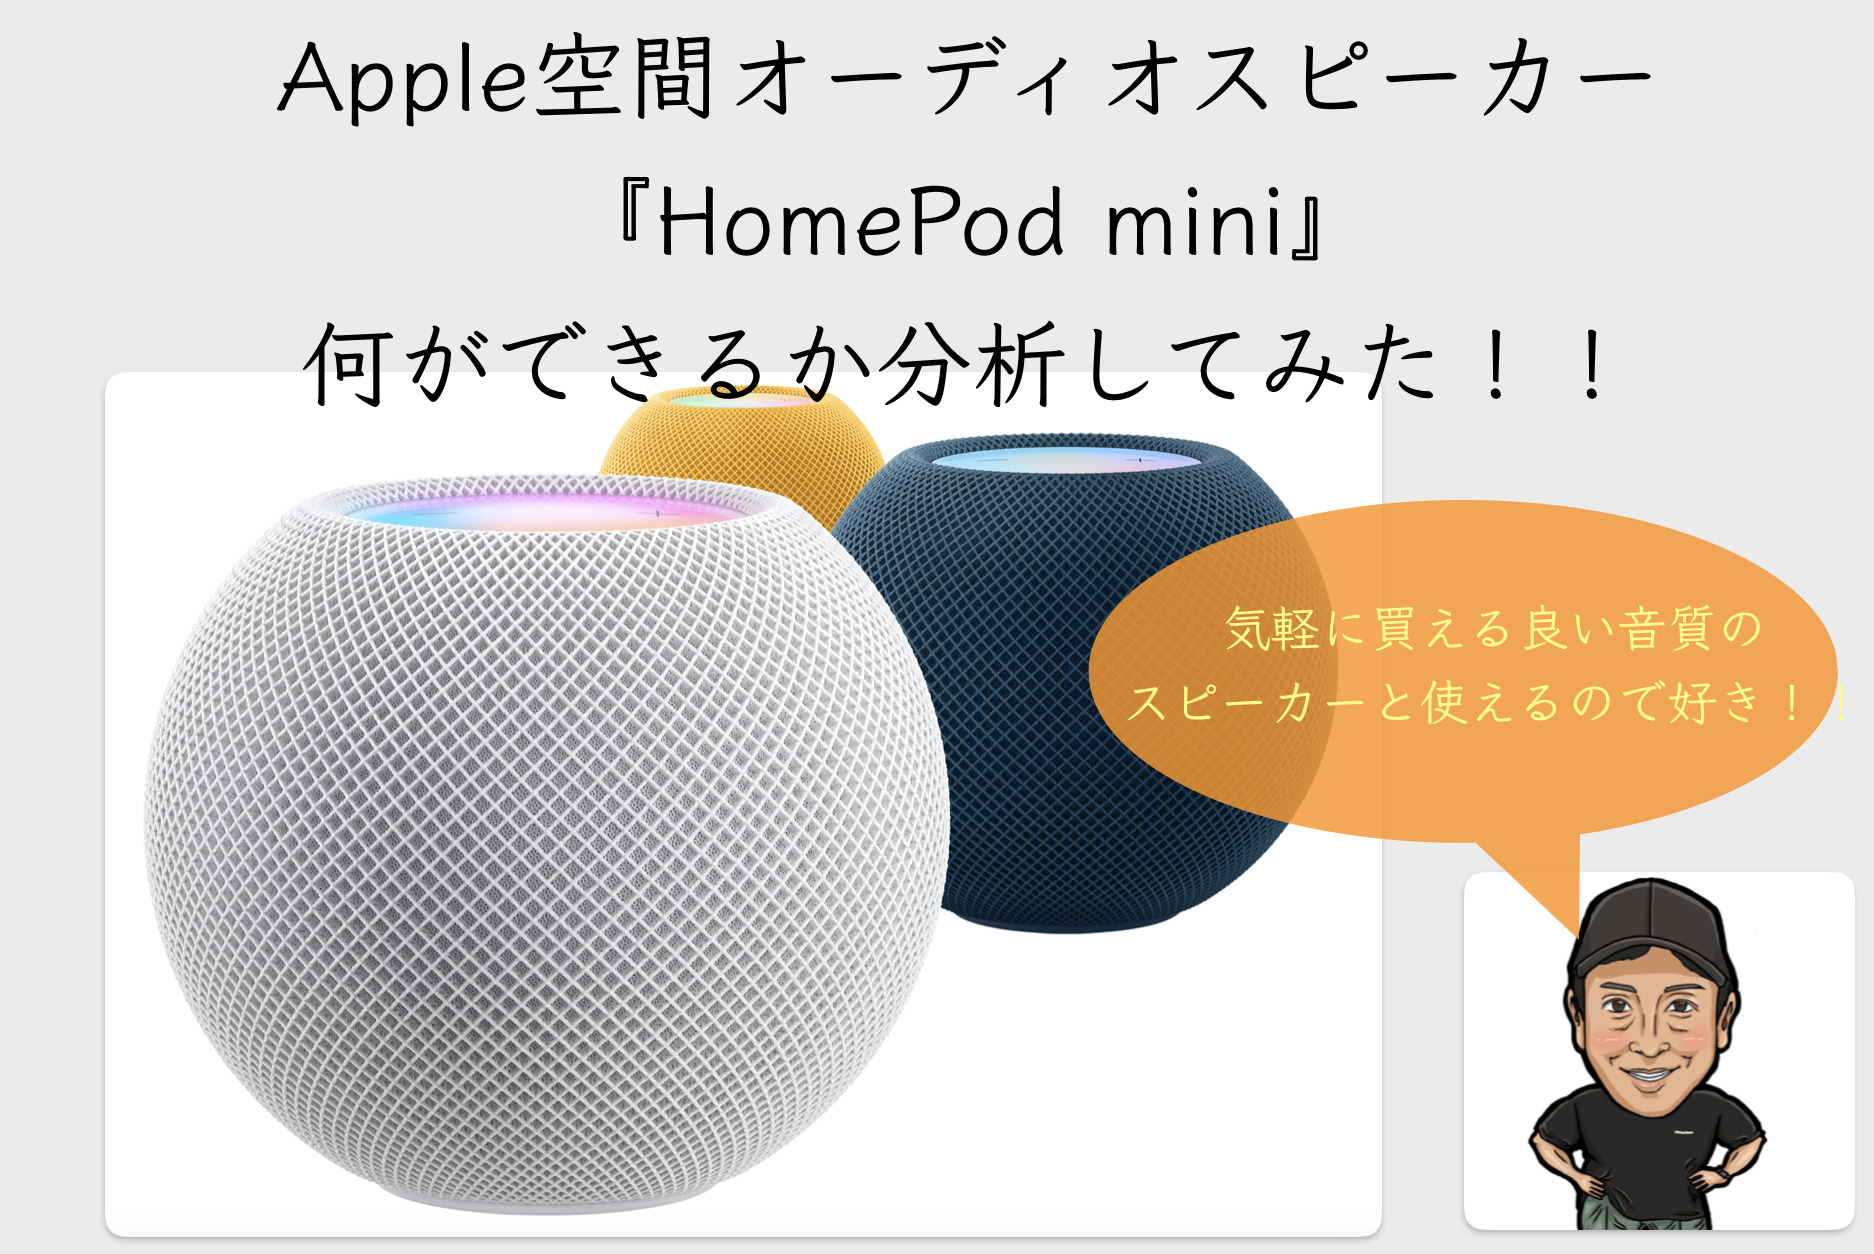 Apple 空間オーディオスピーカー『HomePod mini』でできること14個